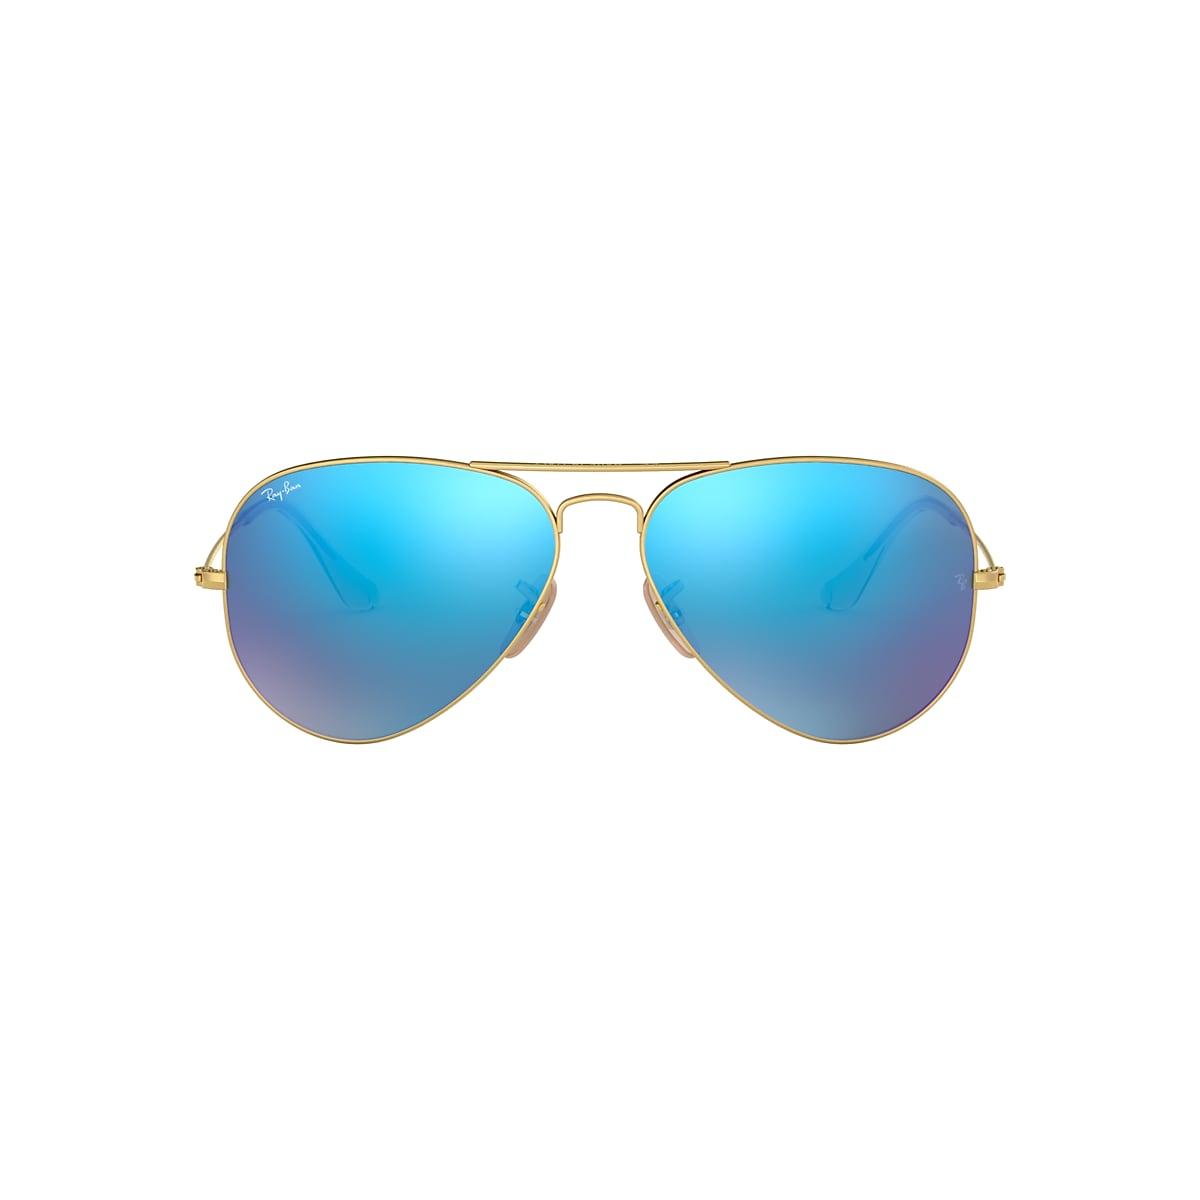 Ray Ban Blue Tinted Aviator Sunglasses S20C5507 @ ₹6898